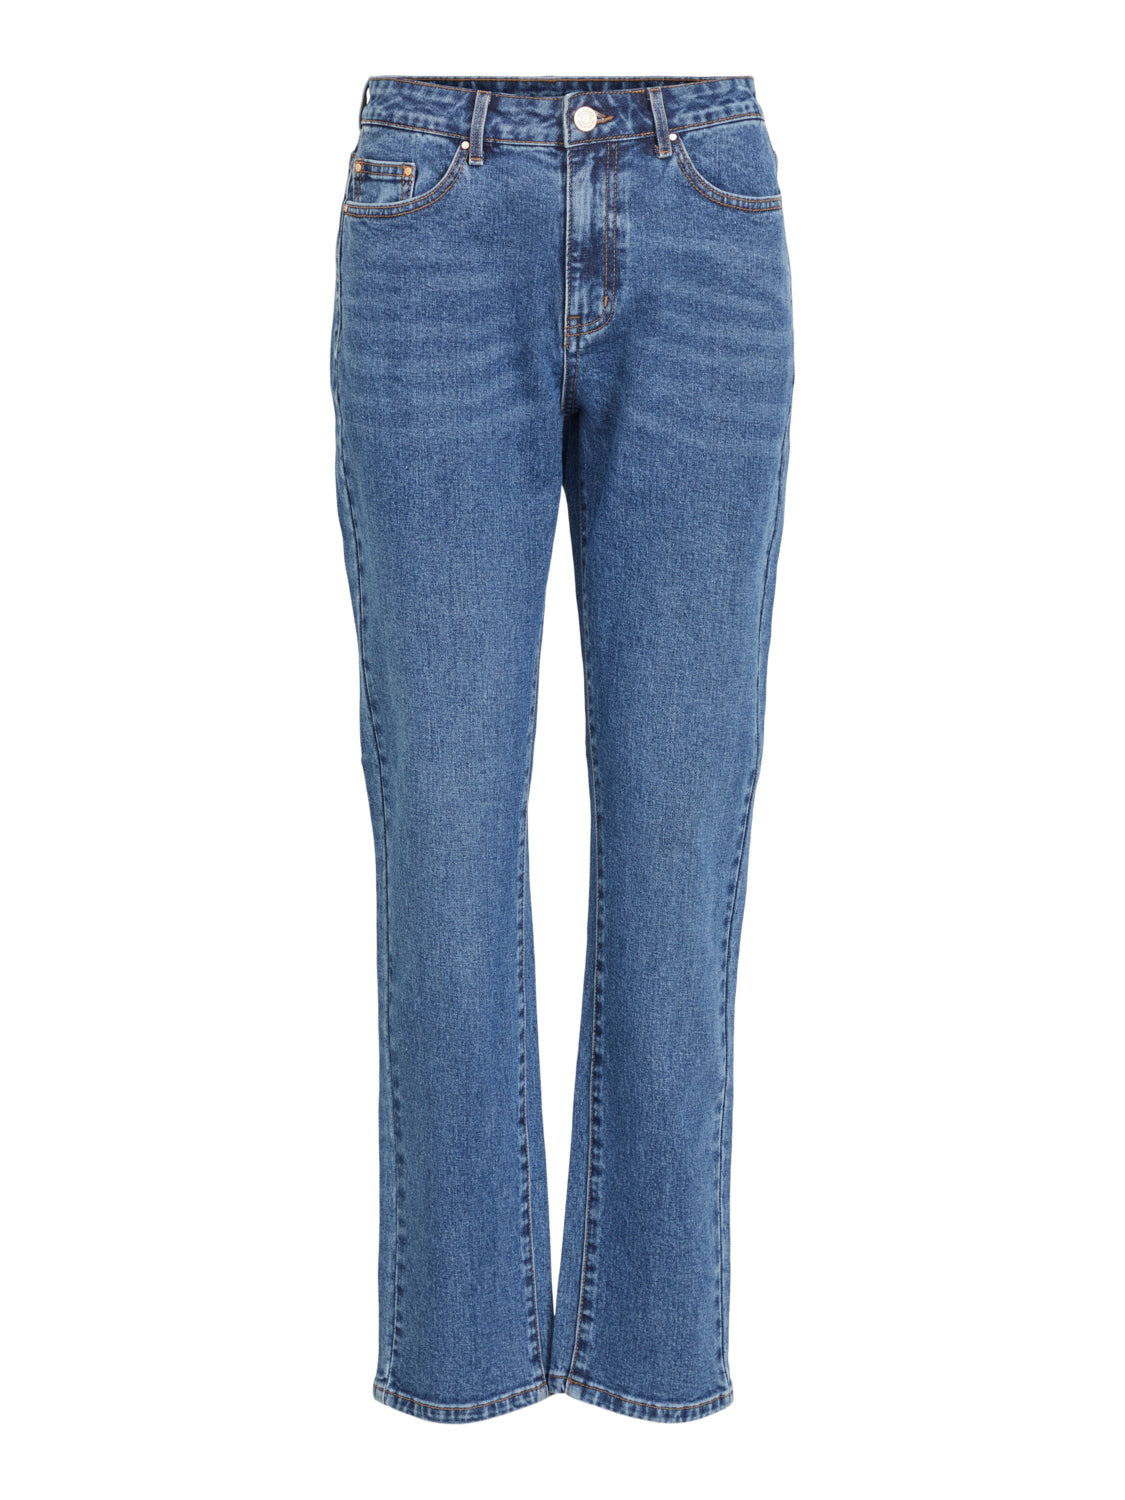 VISTRAY Jeans - Medium Blue Denim